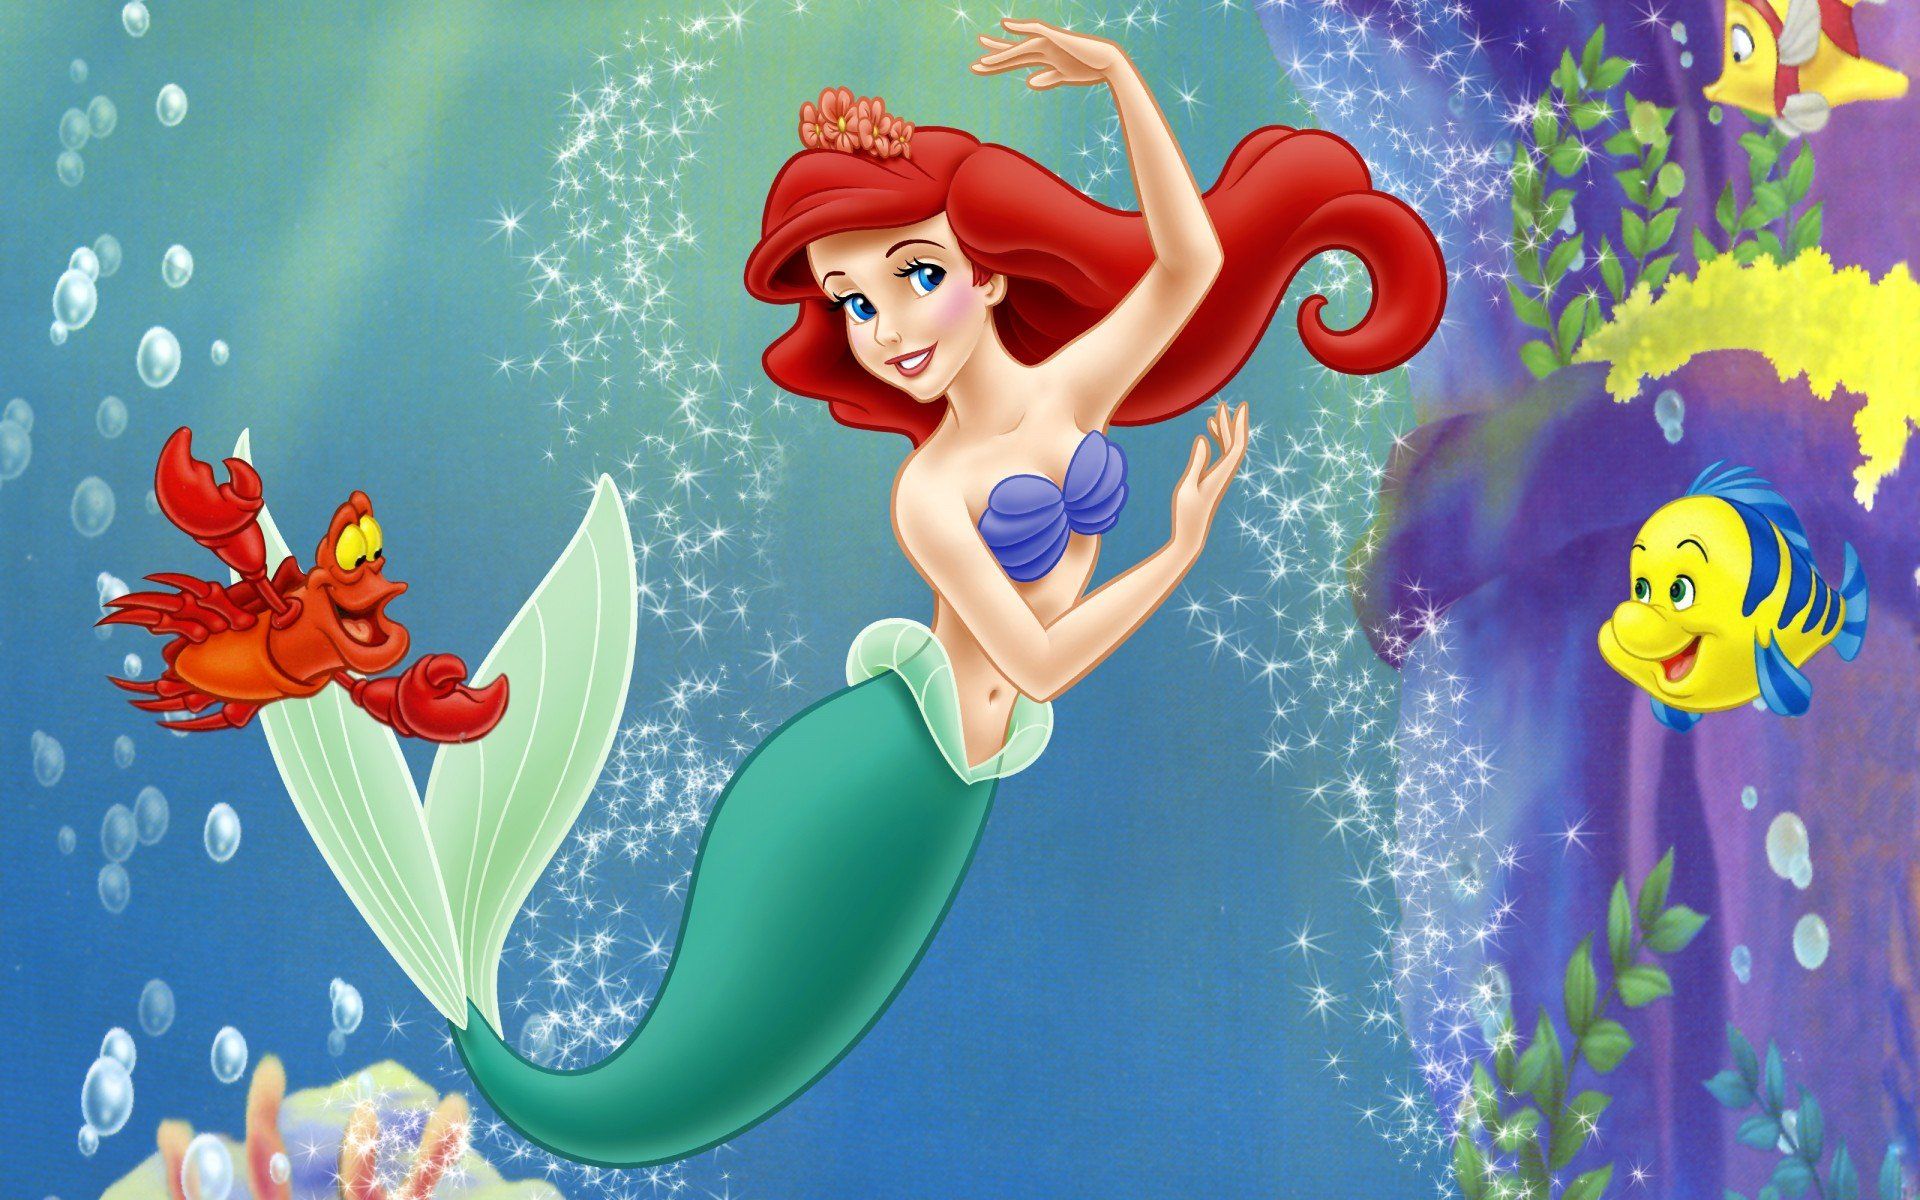 Little Mermaid Ariel and Eric Wallpaper. Little Mermaid Disney Wallpaper, 3D Mermaid Wallpaper and Magical Mermaid Wallpaper